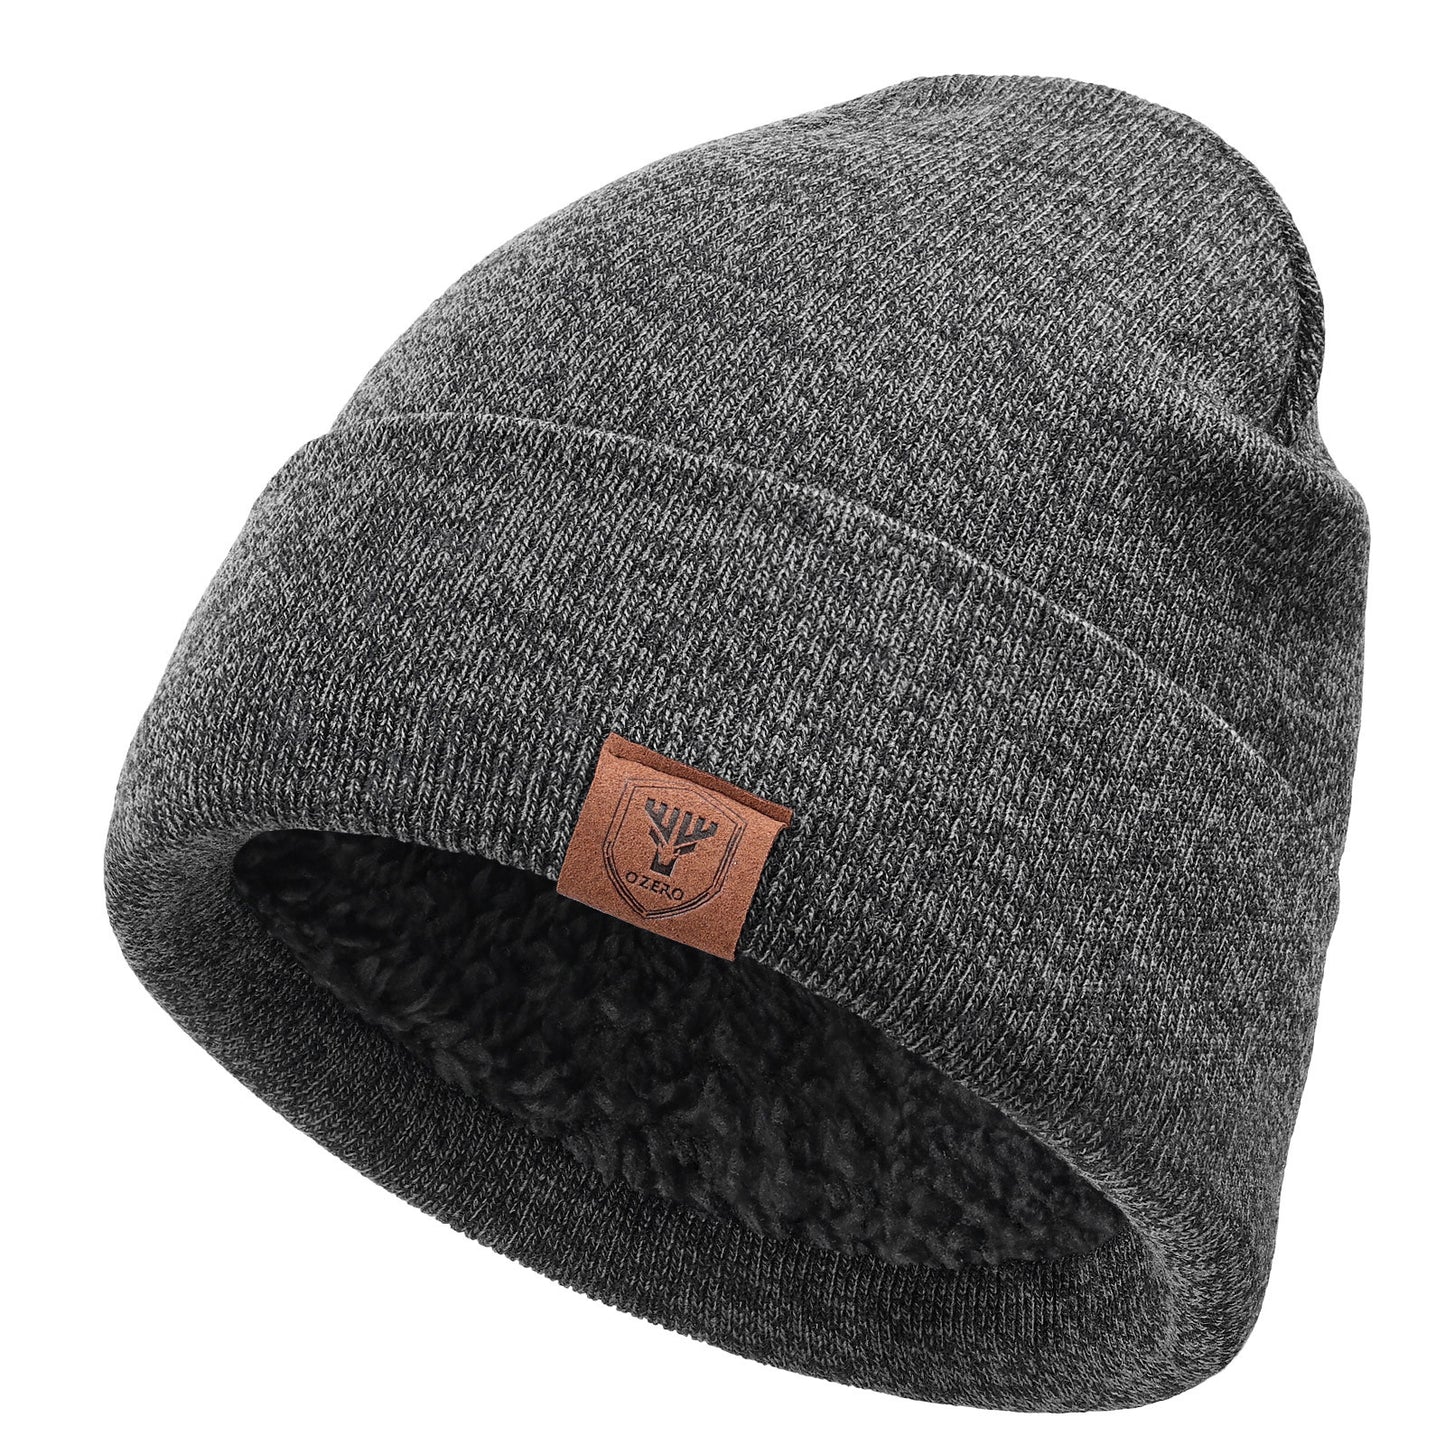 OZERO Winter Beanie Daily Hat - Thermal Polar Fleece Ski Stocking Skull Cap for Men and Women